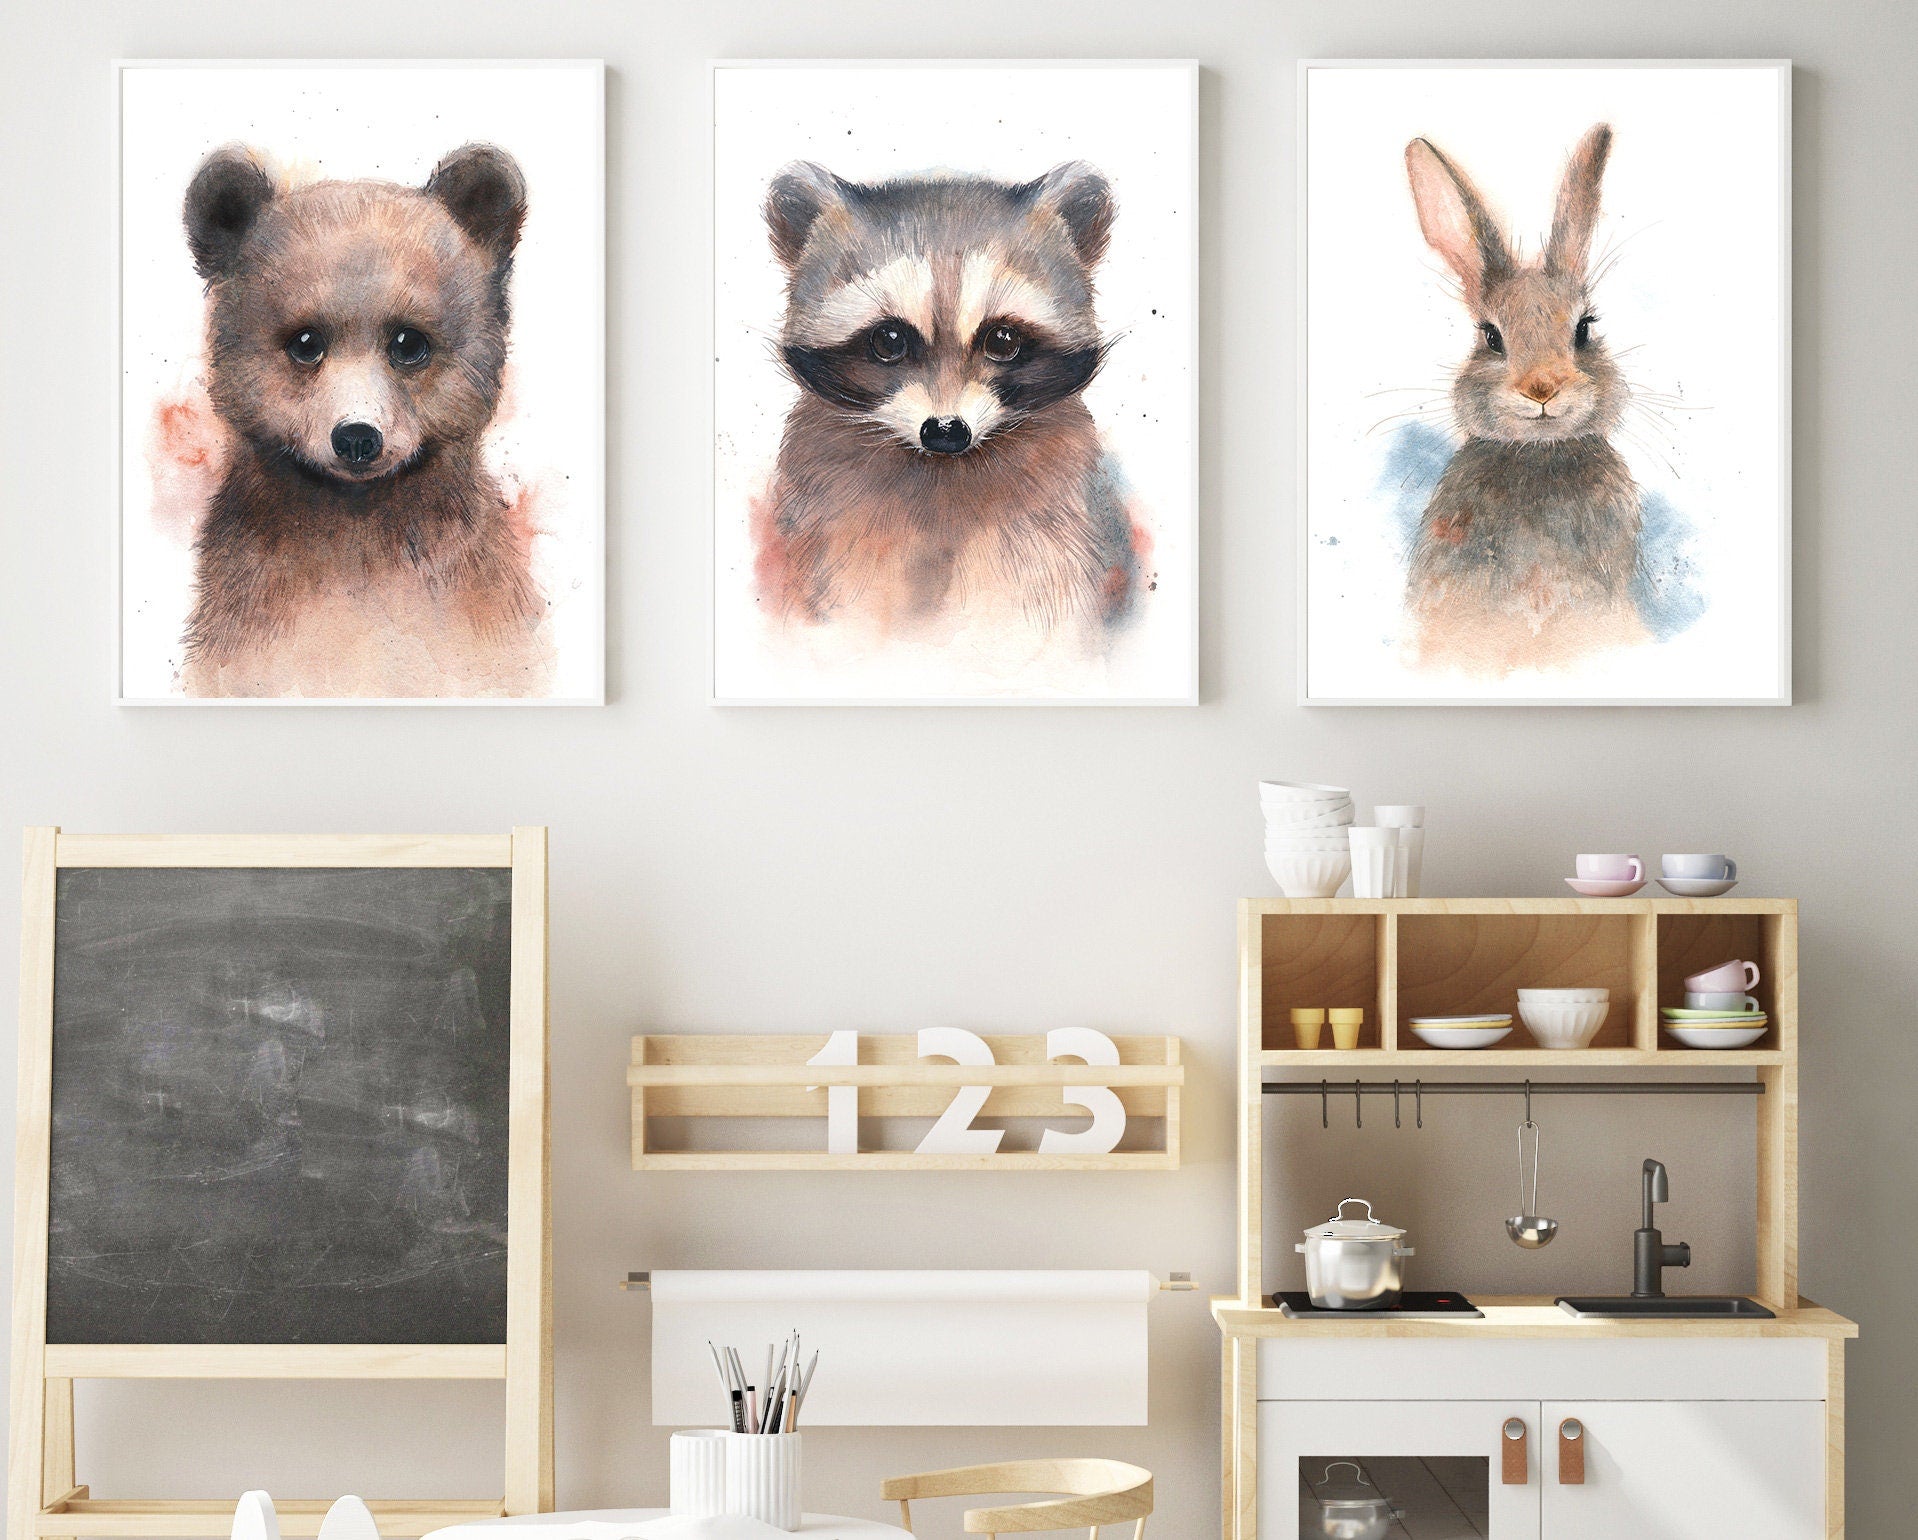 Baby Panda Print, Panda Nursery Art, Nursery Animal Print, Cute Panda Wall Decor, Nursery Wall Decor, Kids Bedroom Wall Art, Boys Room Decor